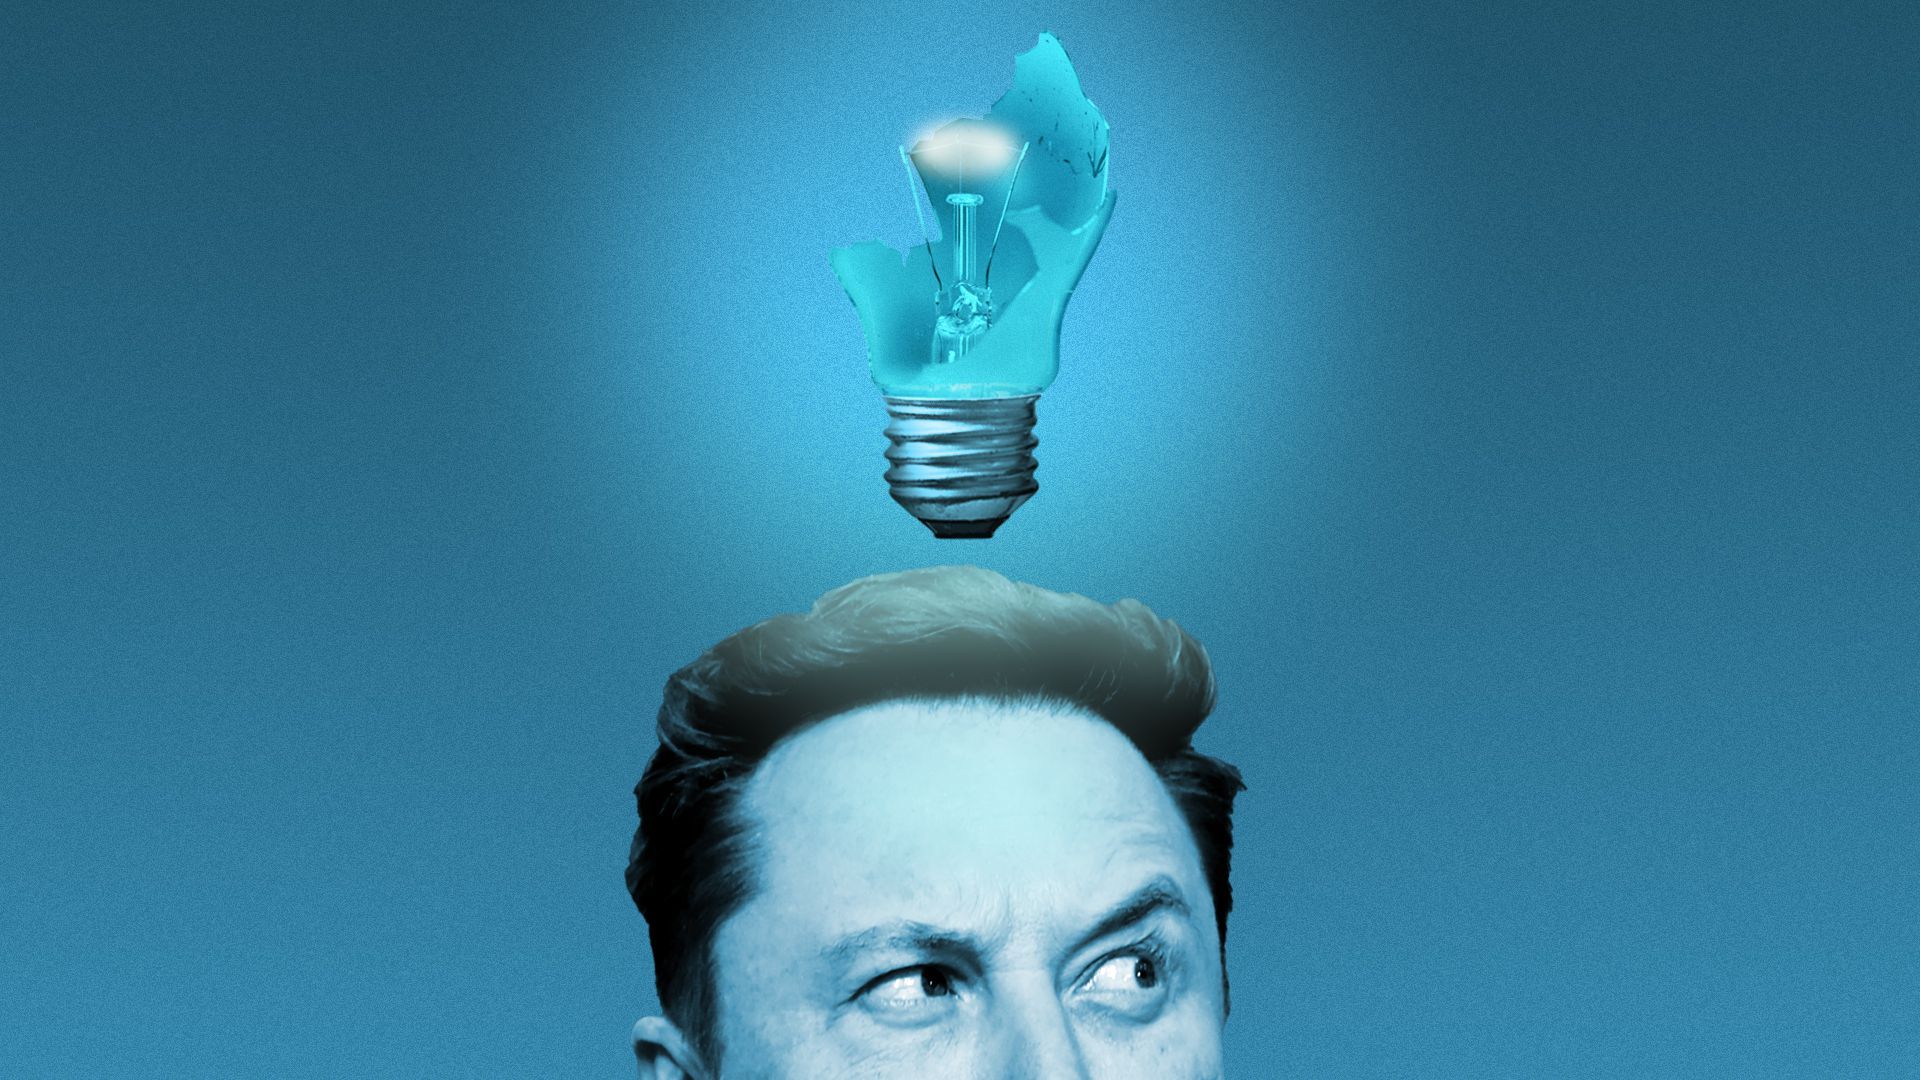 Photo illustration of Elon Musk with a broken lightbulb over his head